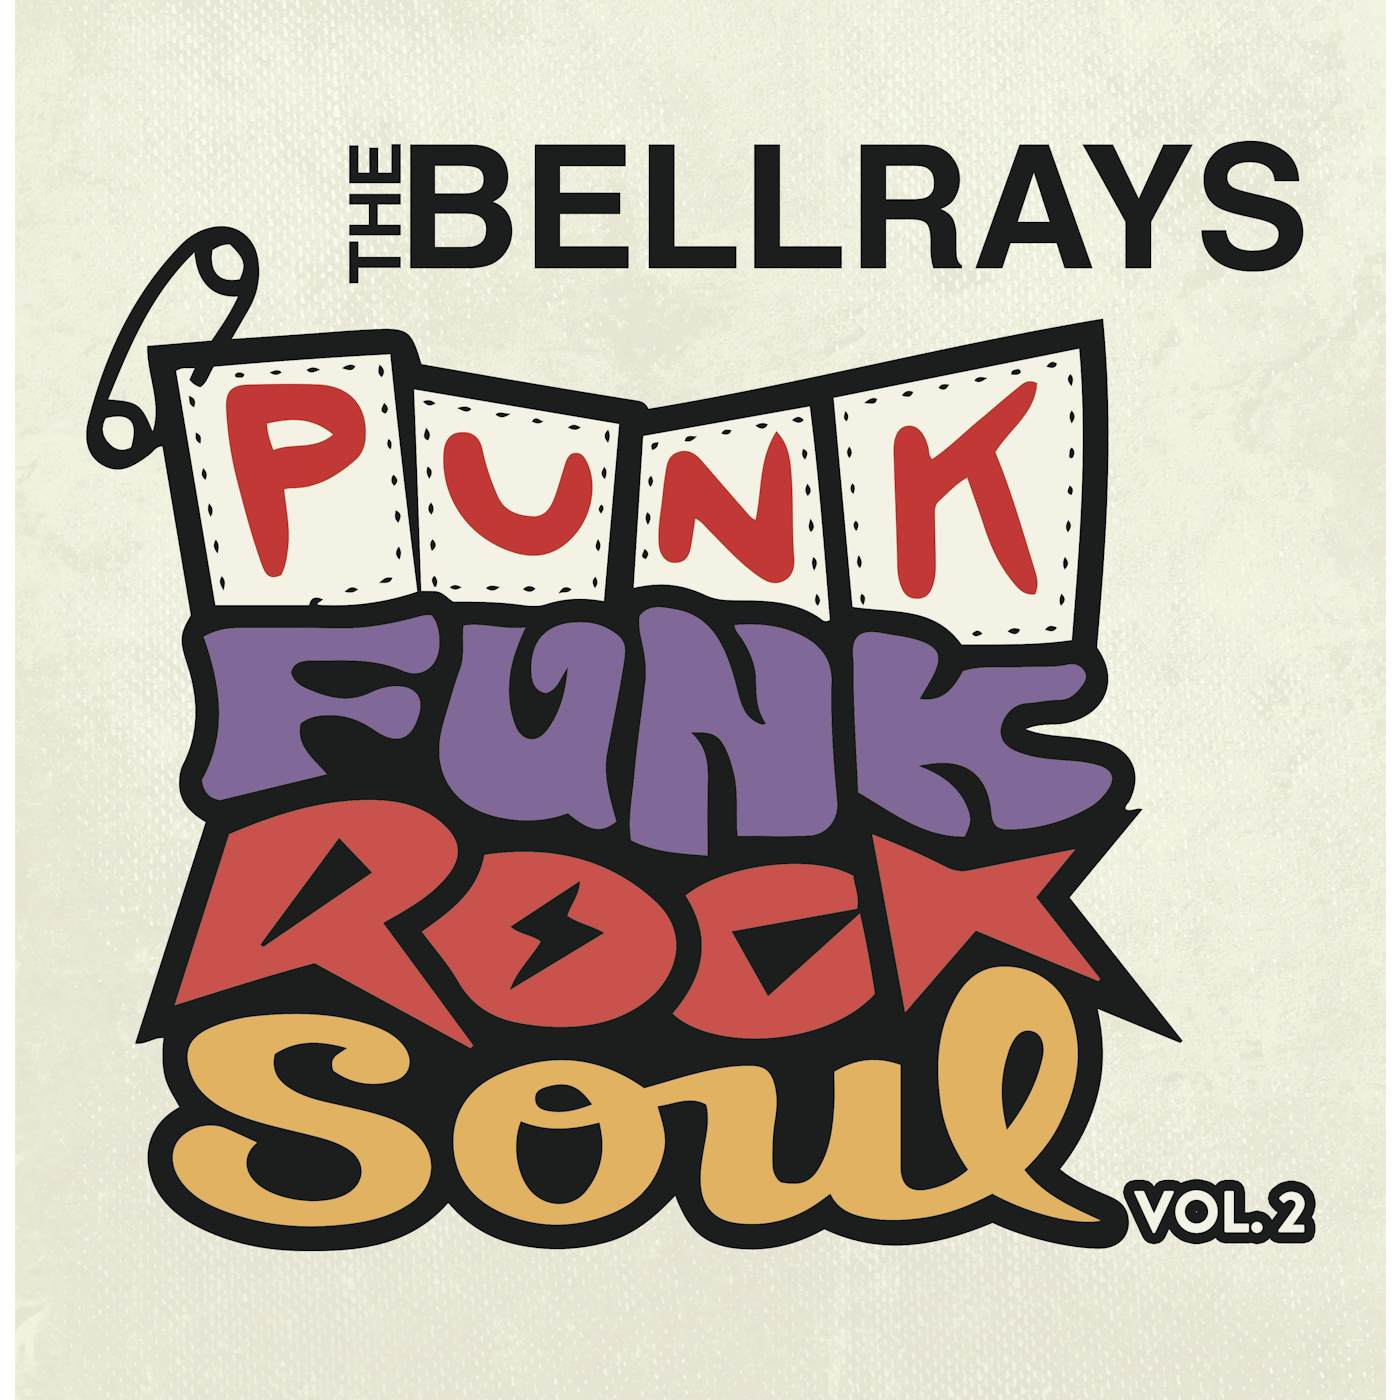 The BellRays PUNK FUNK ROCK SOUL 2 CD